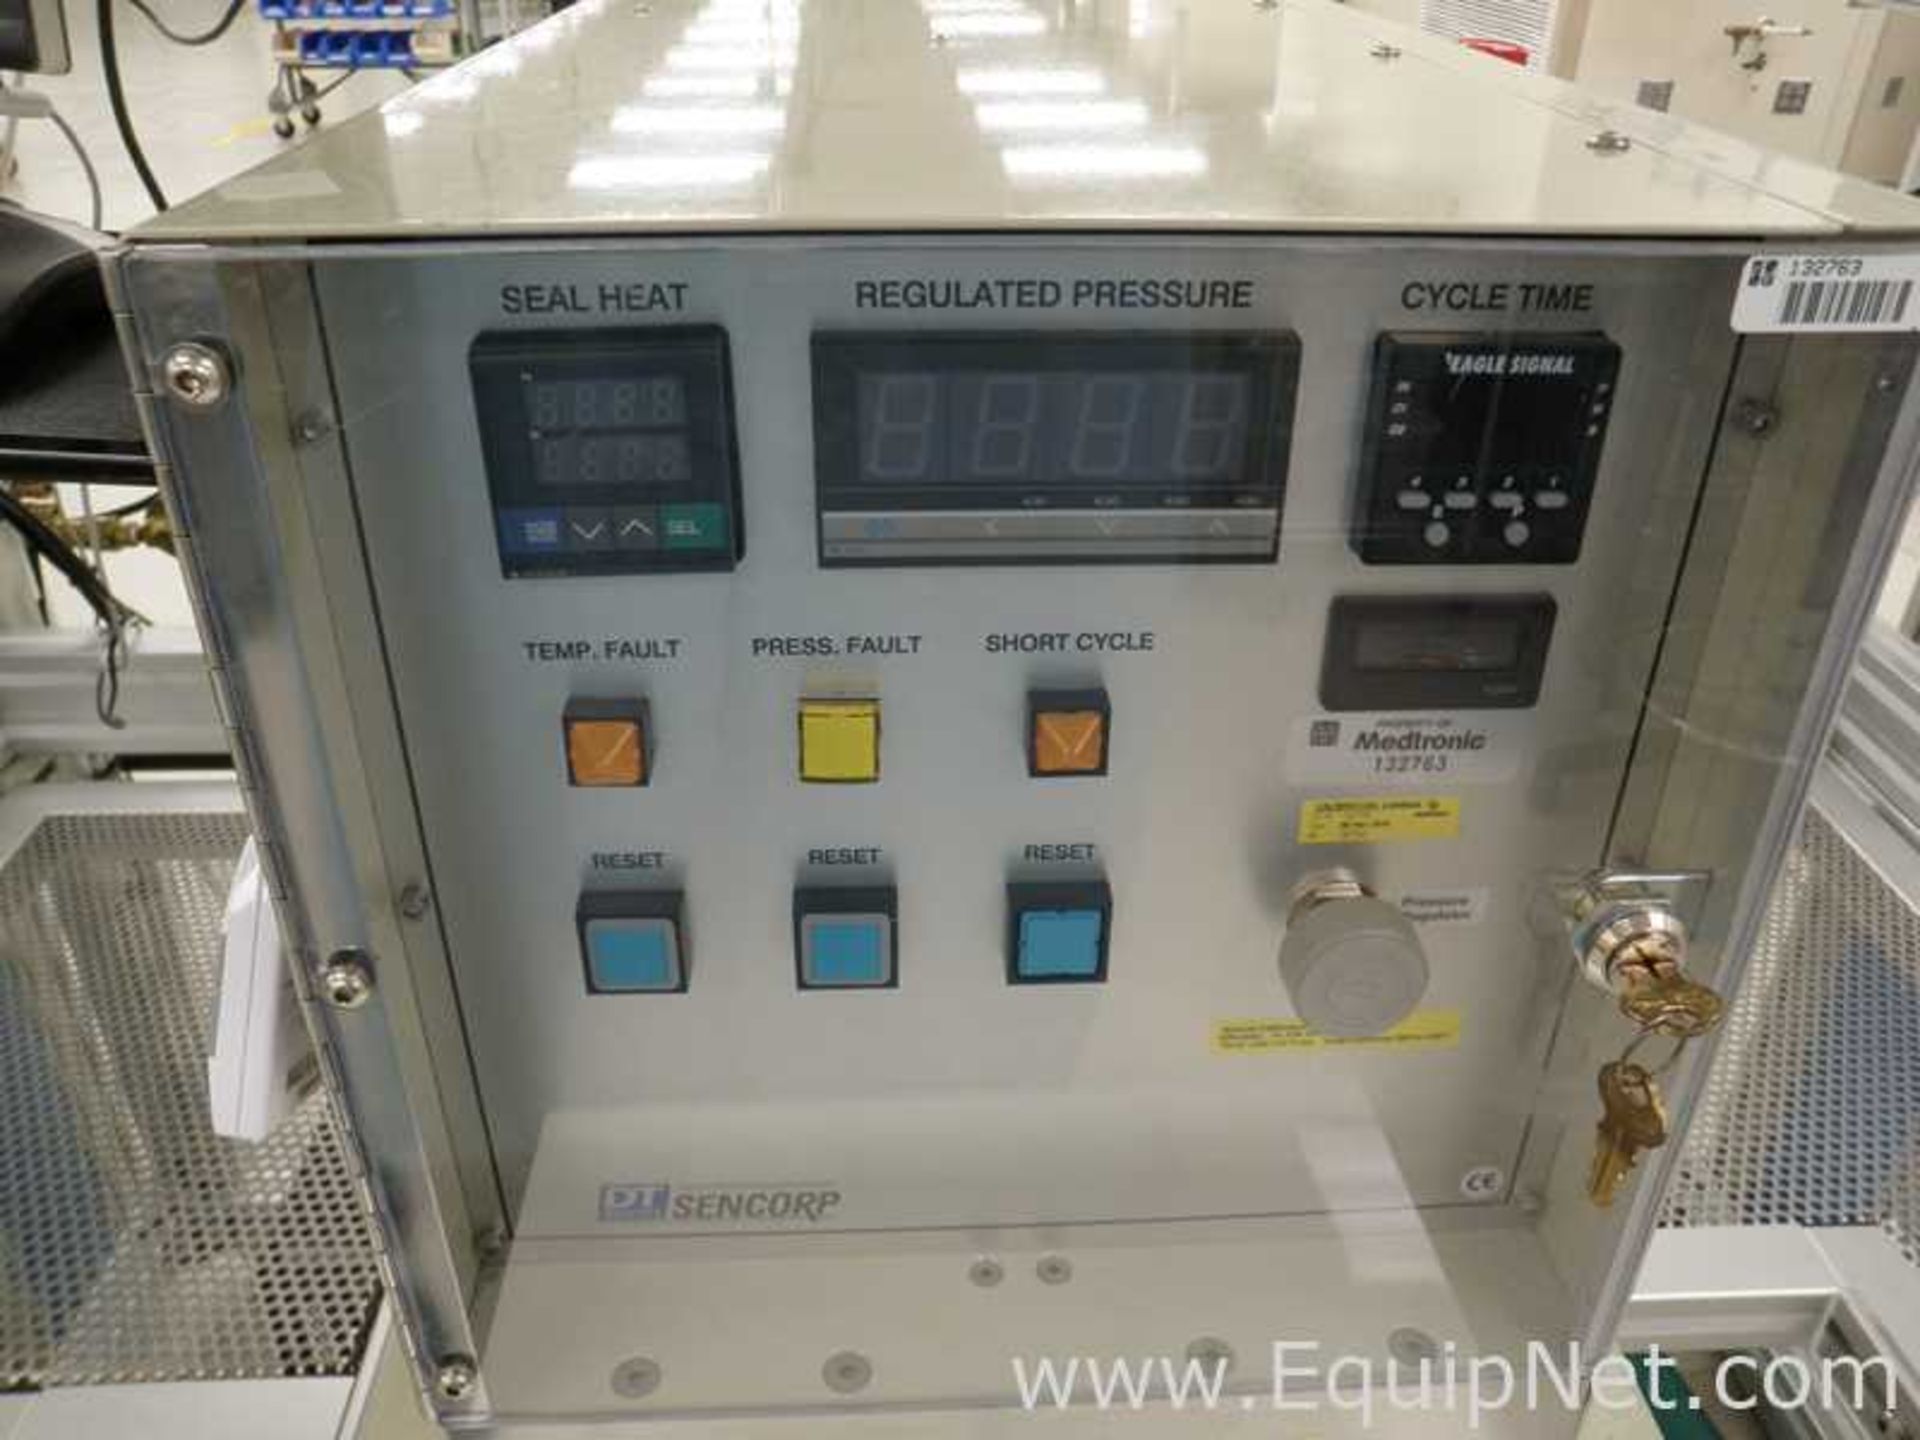 SencorpWhite 12AS|2 Heat Sealer on Workstation - Image 5 of 6